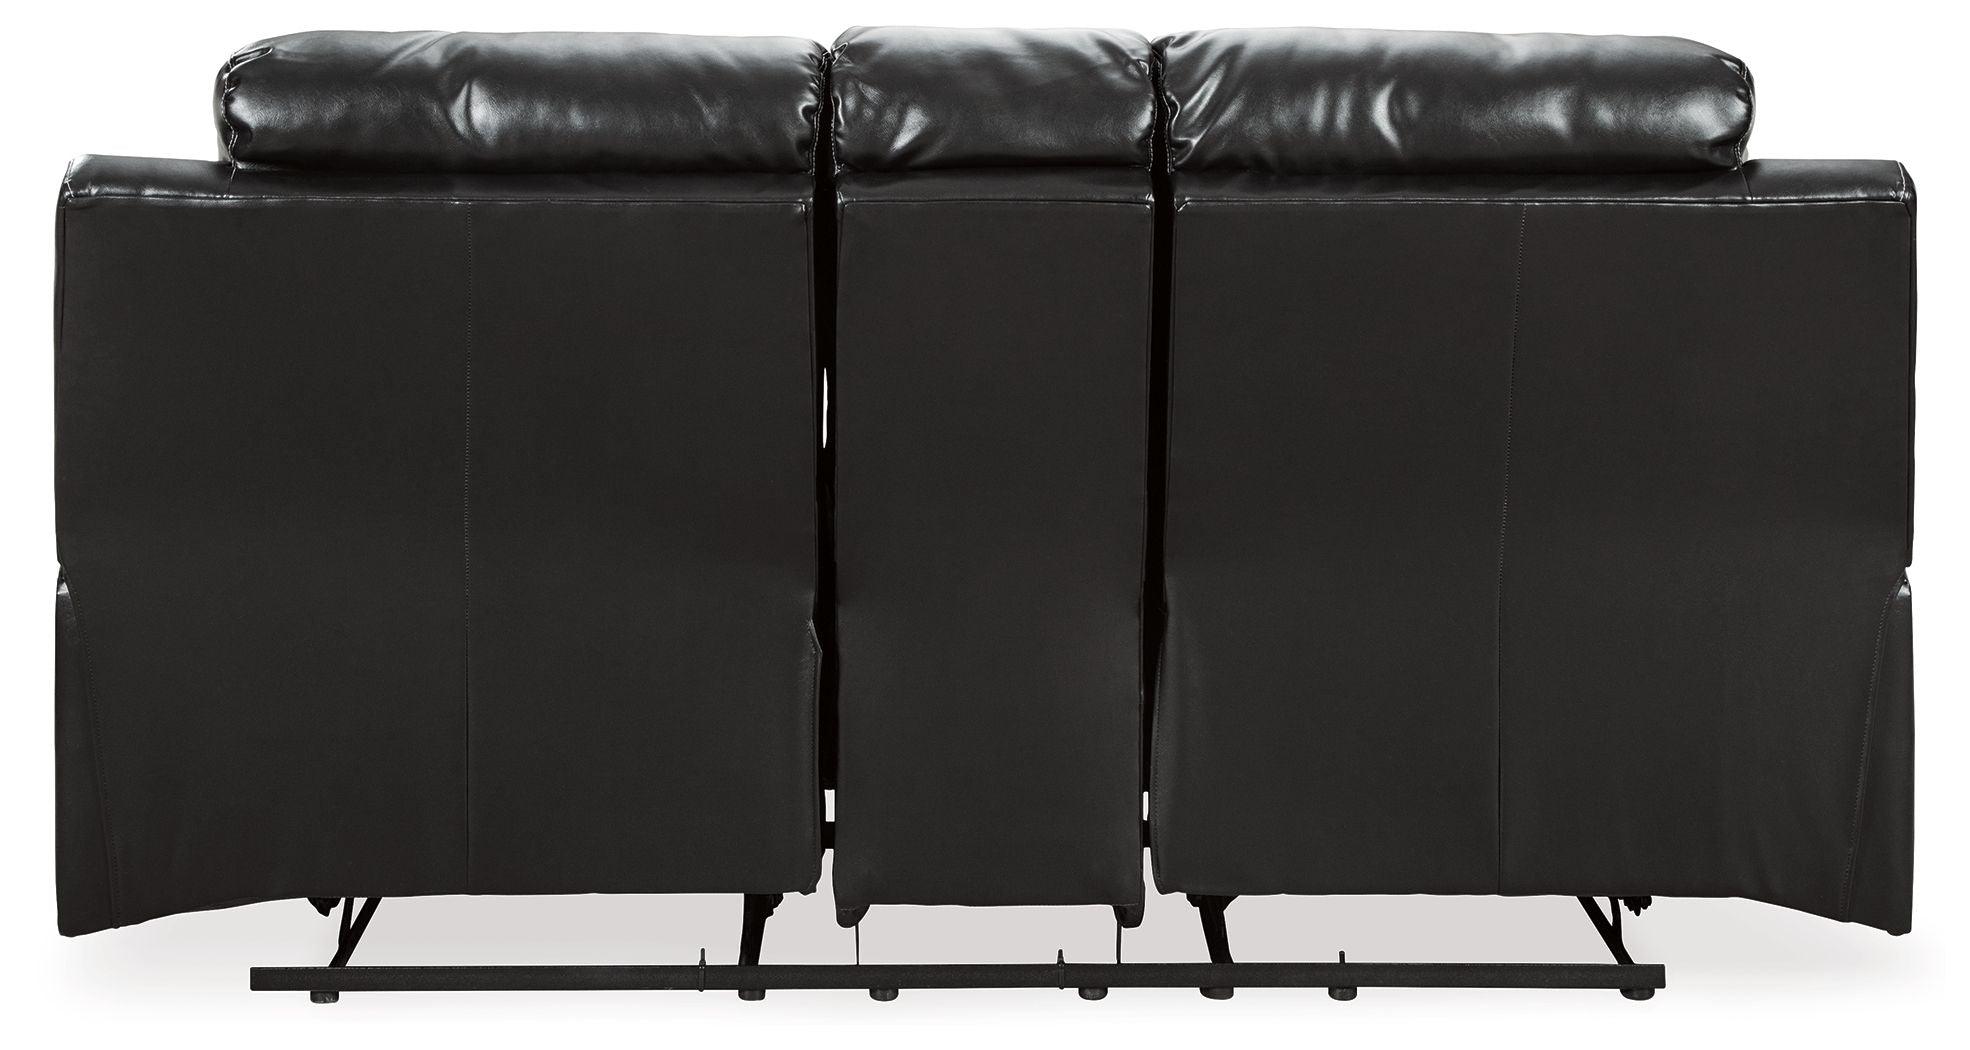 Ashley Furniture - Kempten - Black - Dbl Rec Loveseat W/Console - 5th Avenue Furniture